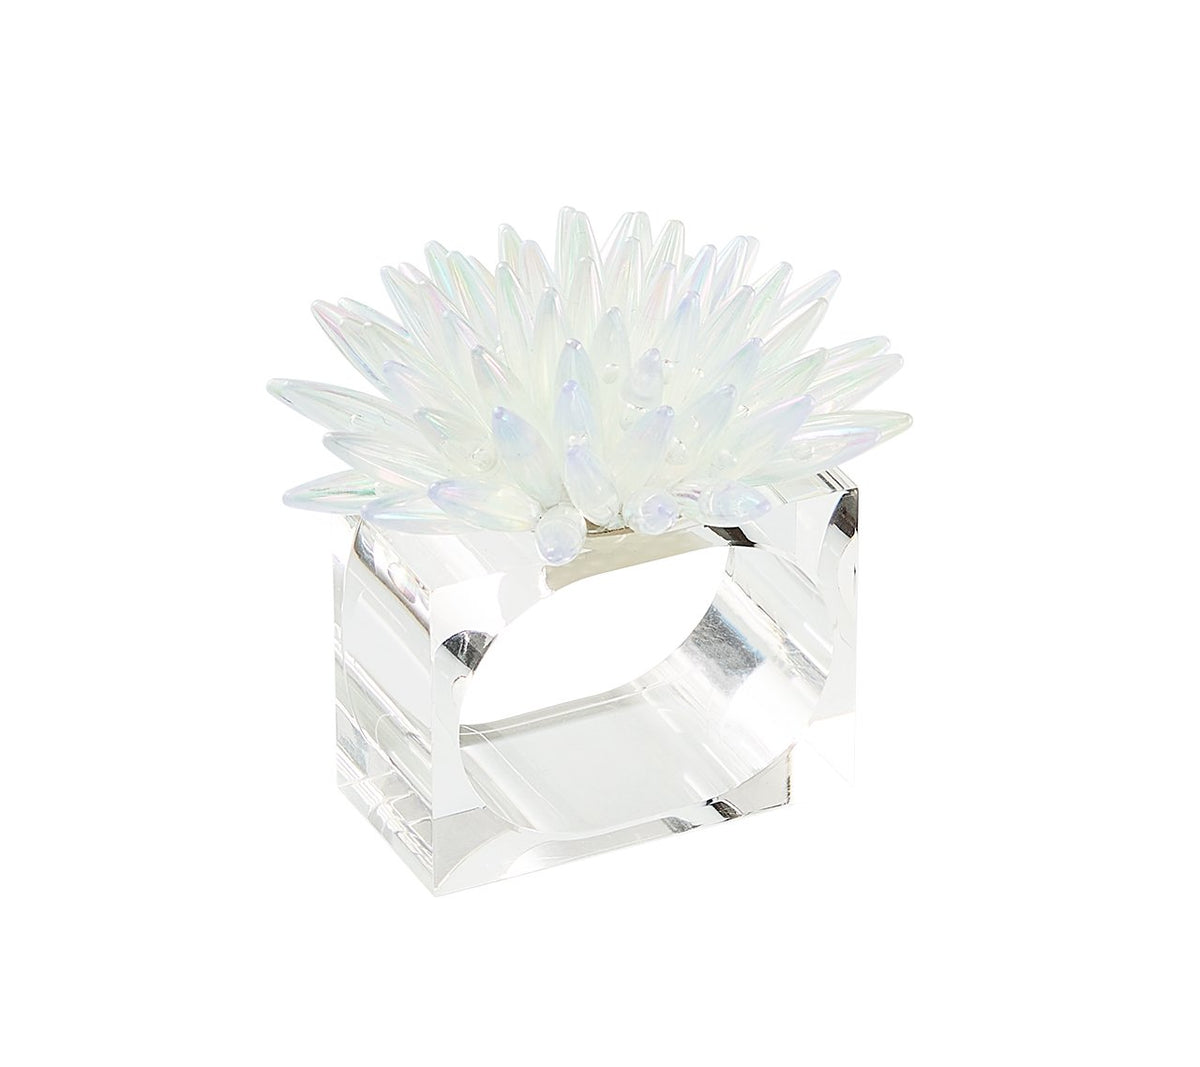 Mirage Napkin Ring in White, Set of 4 by Kim Seybert